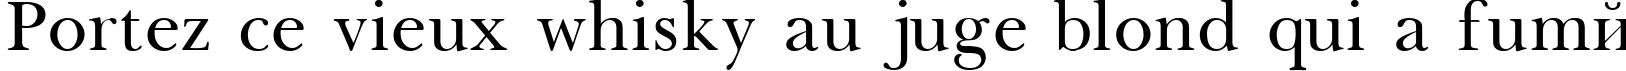 Пример написания шрифтом Pasma Plain:001.001 текста на французском